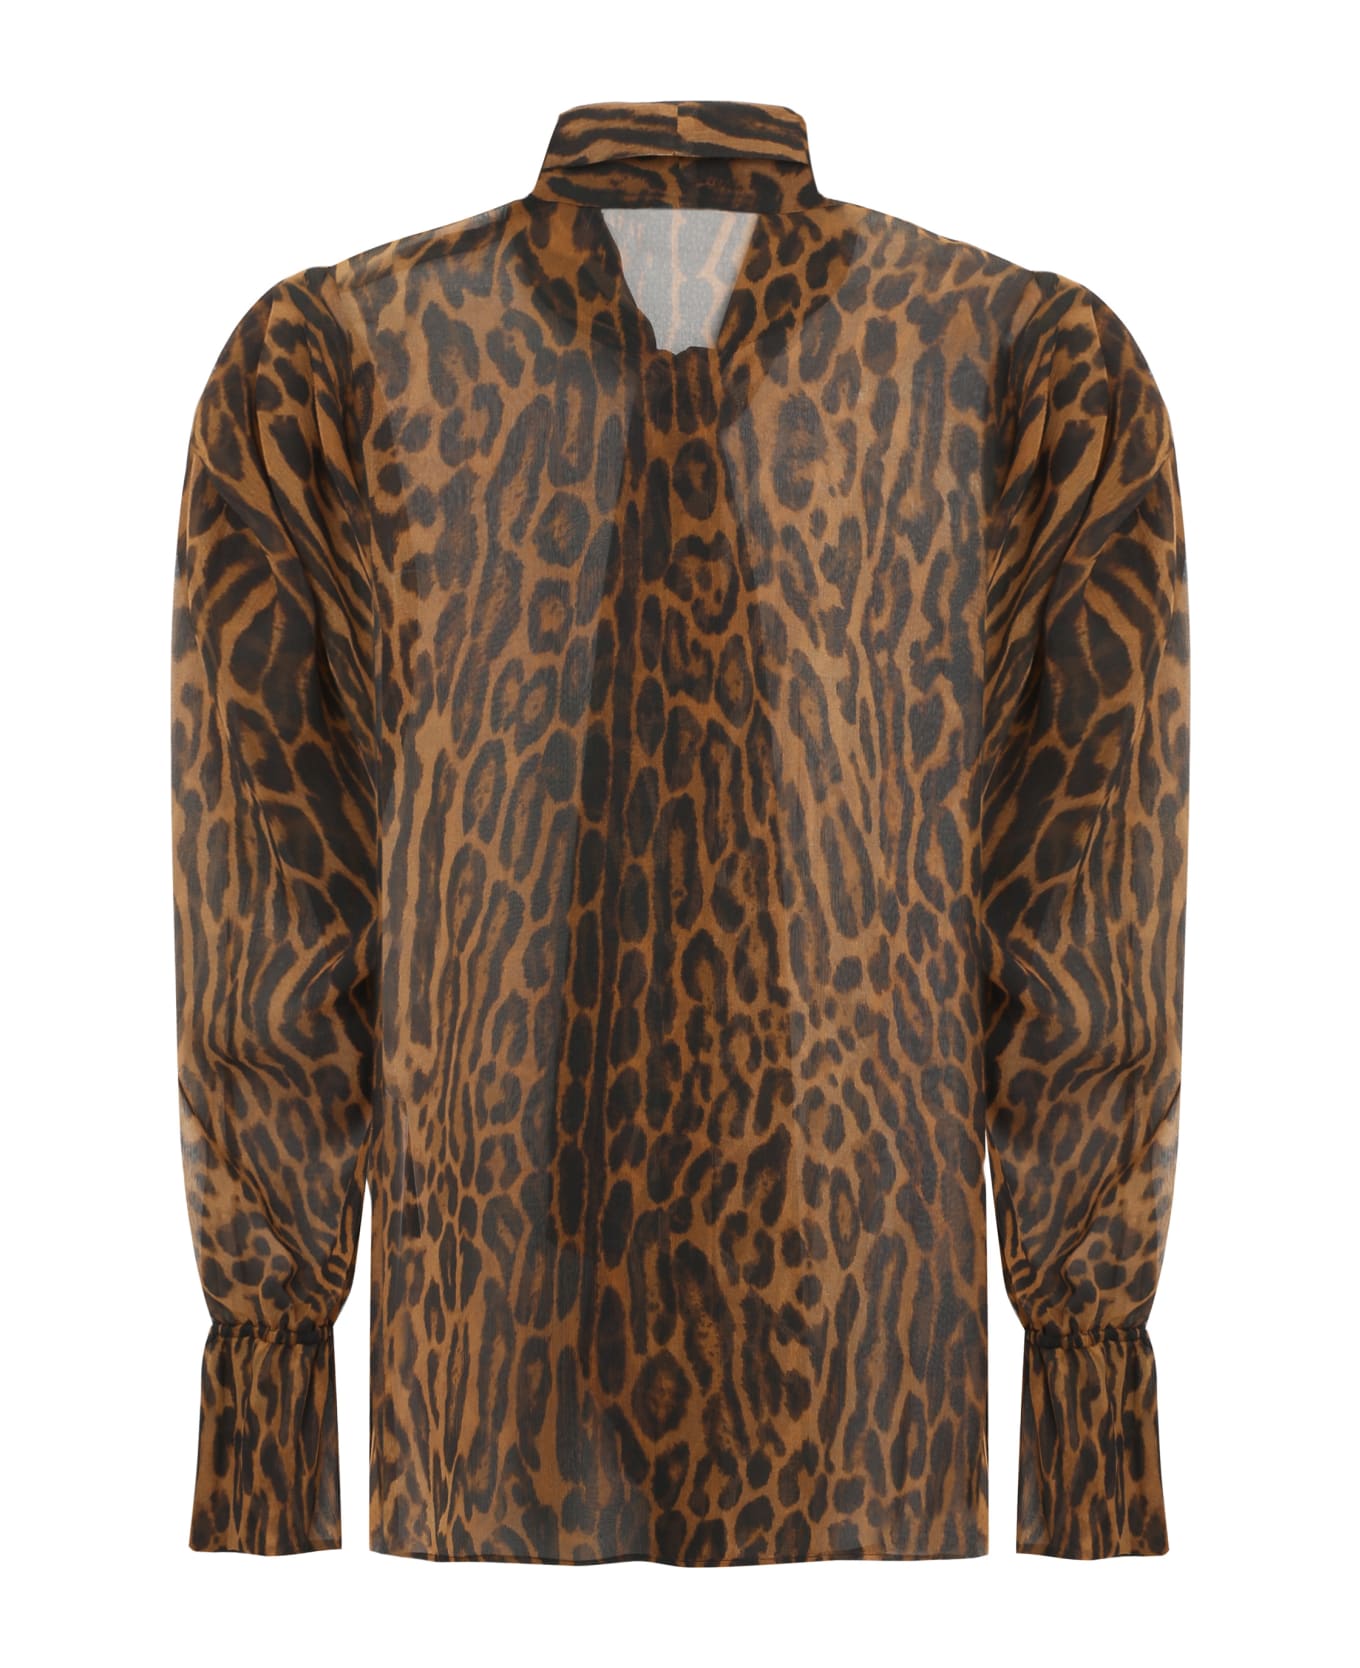 Nina Ricci Printed Silk Shirt - Leopard